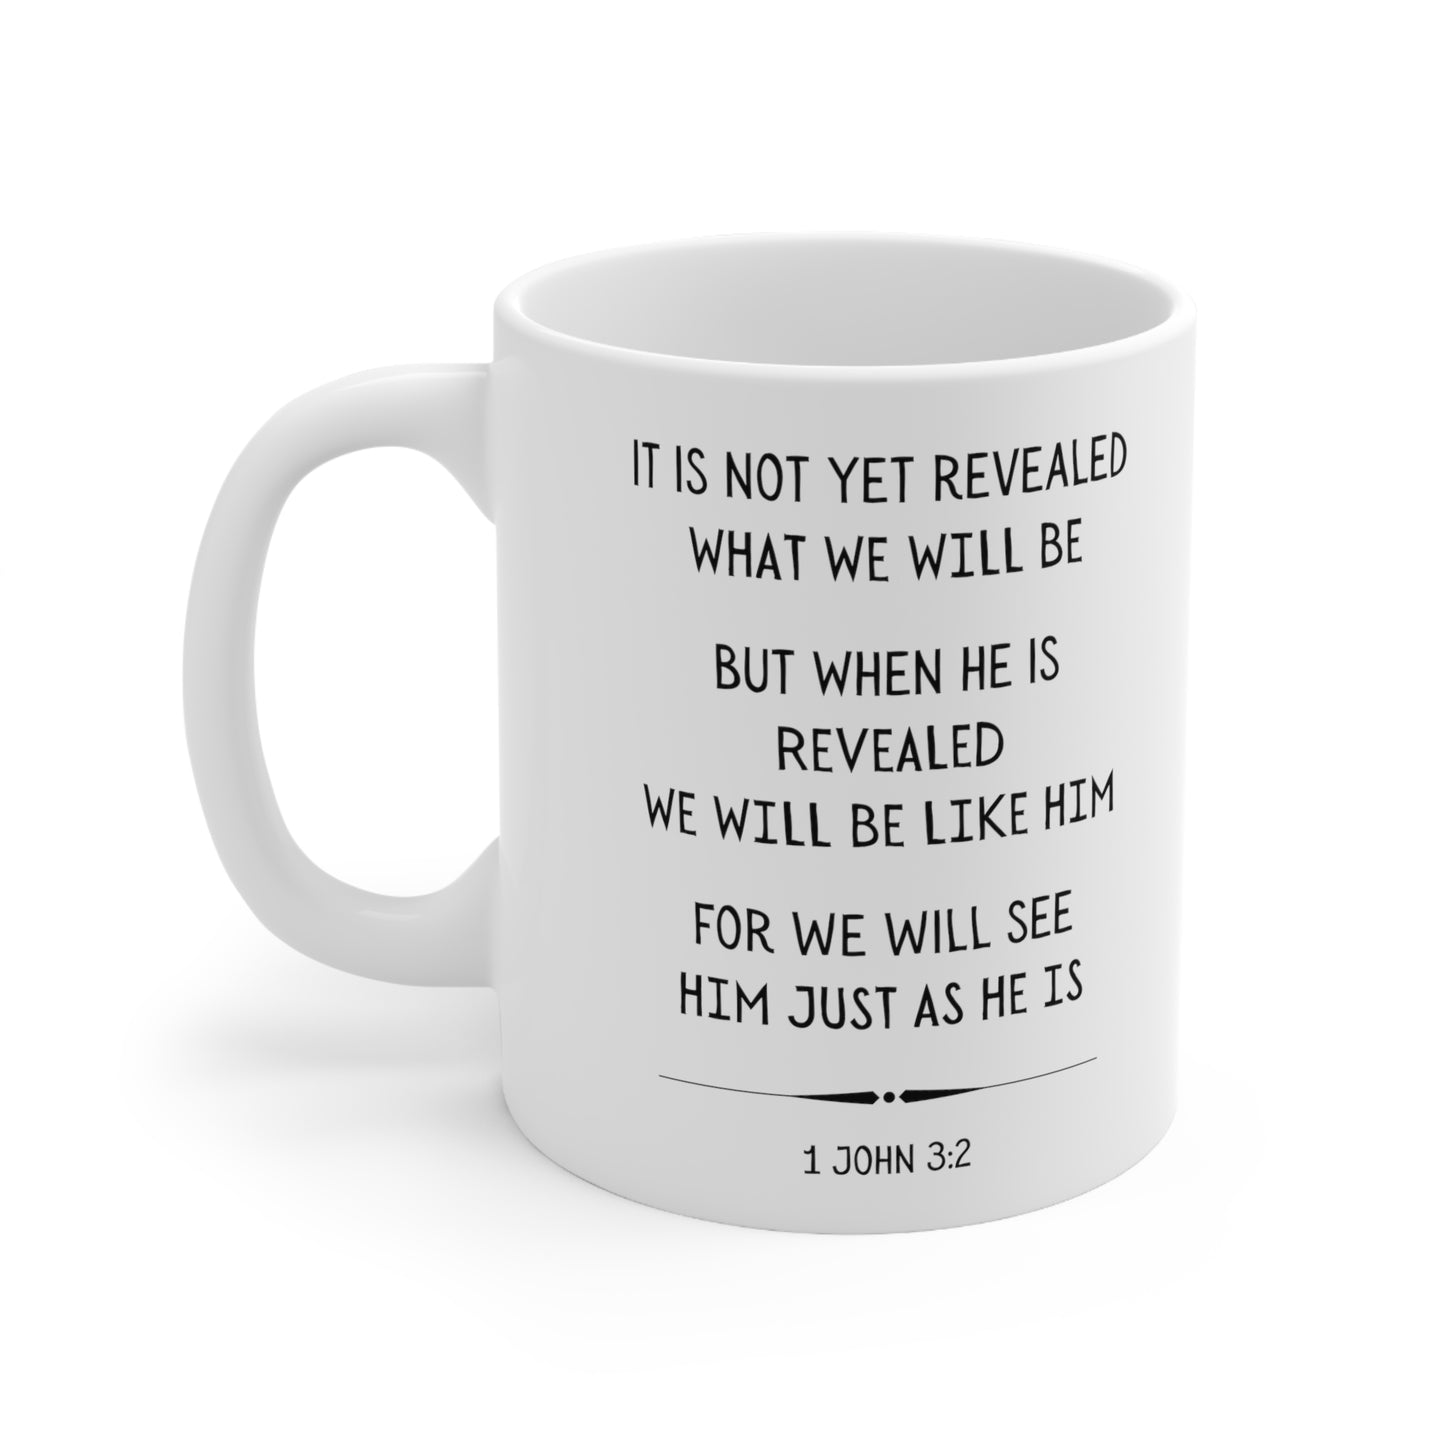 Scripture Mug, We Will Be Like Him, 1 John 3:2